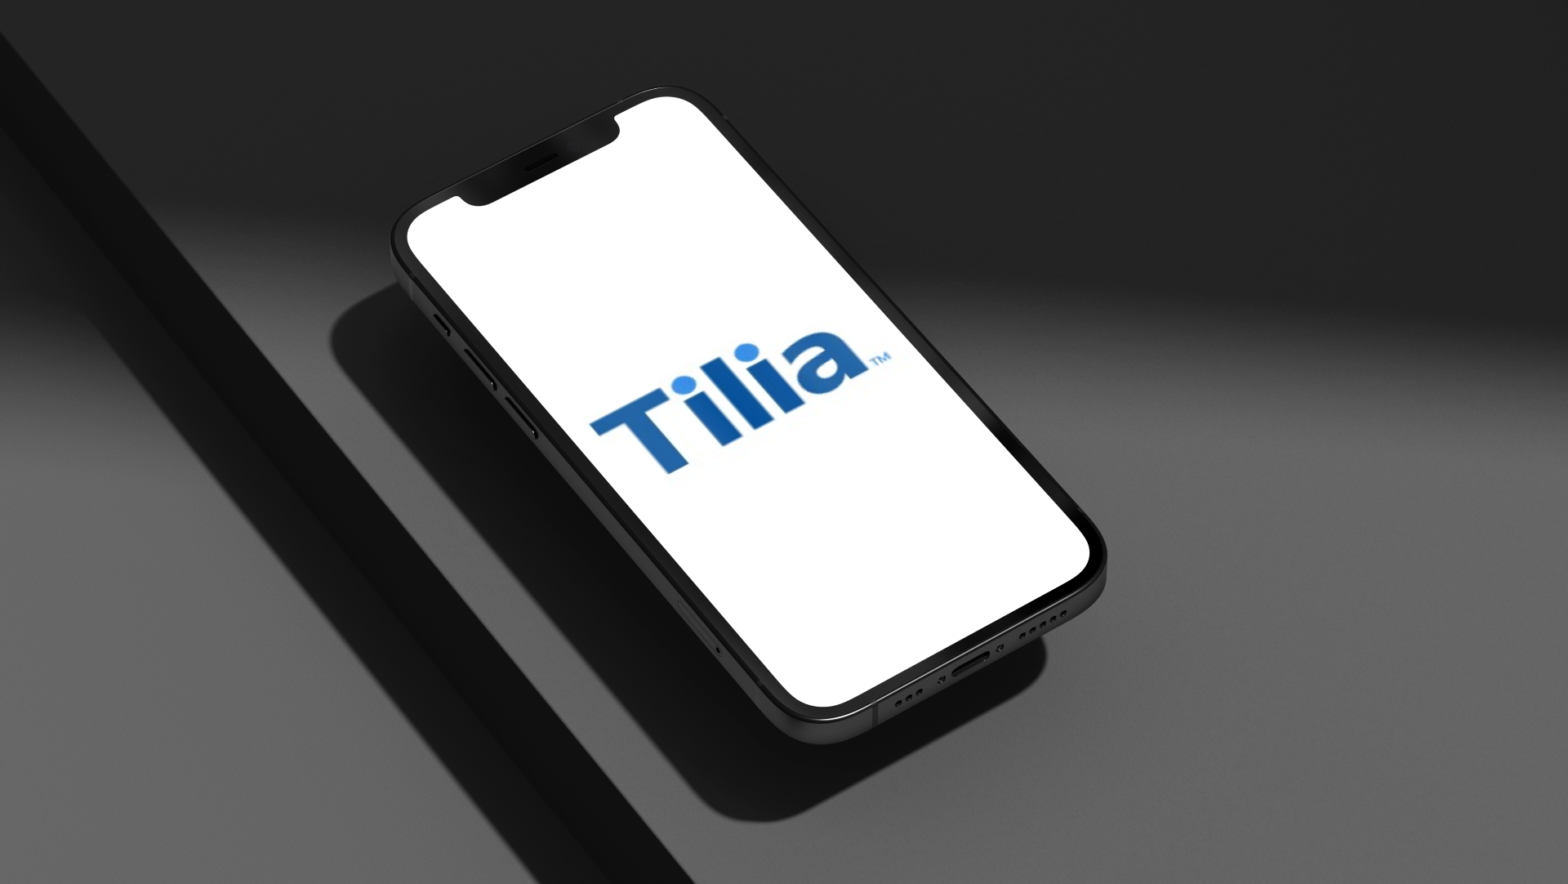 Tilia raises $22 million to improve digital economy in games